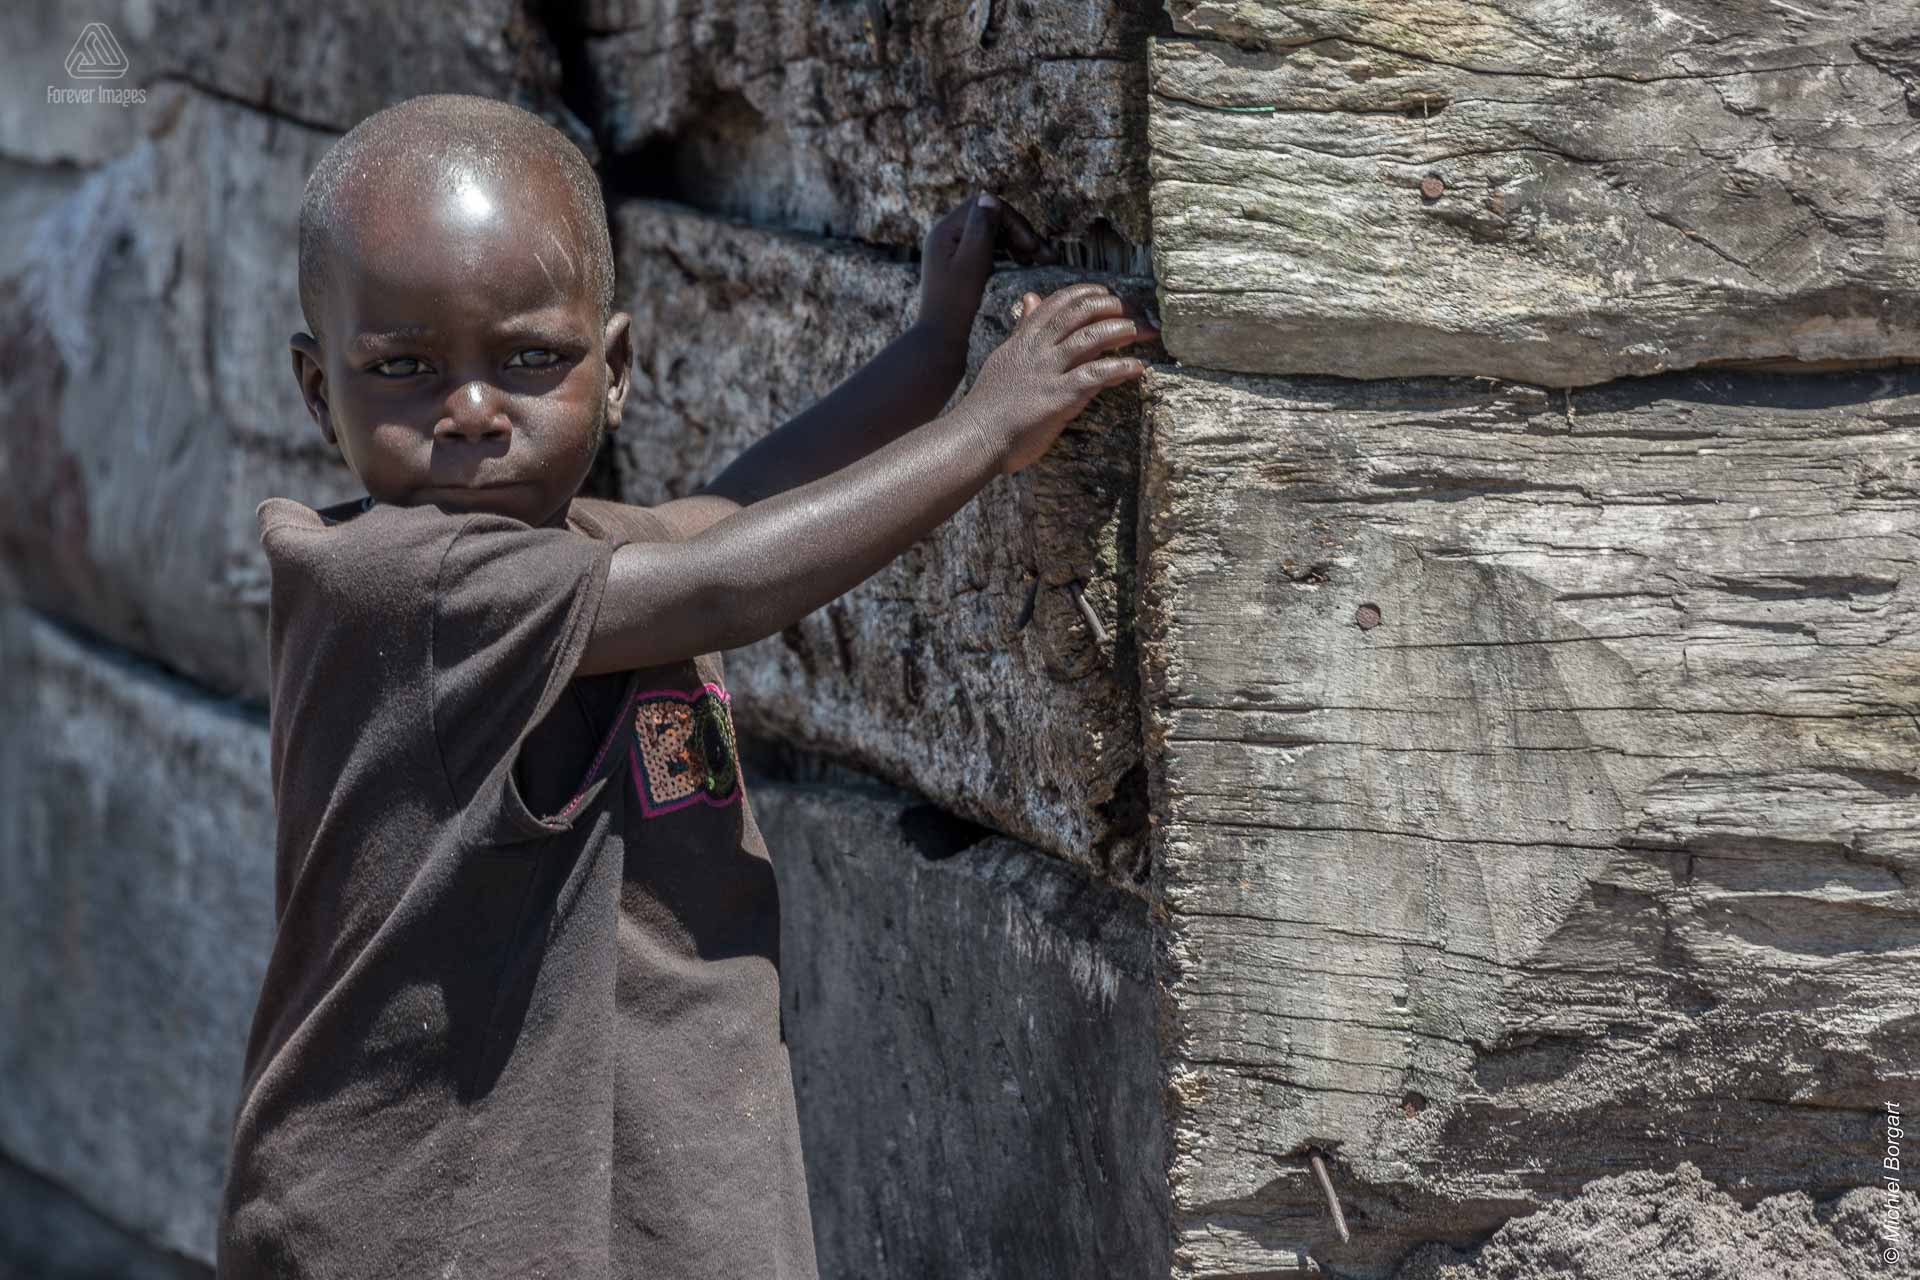 Portrait photo of a child in Uganda during the Muskathlon of 2015 | Portrait Photographer Michiel Borgart - Forever Images.